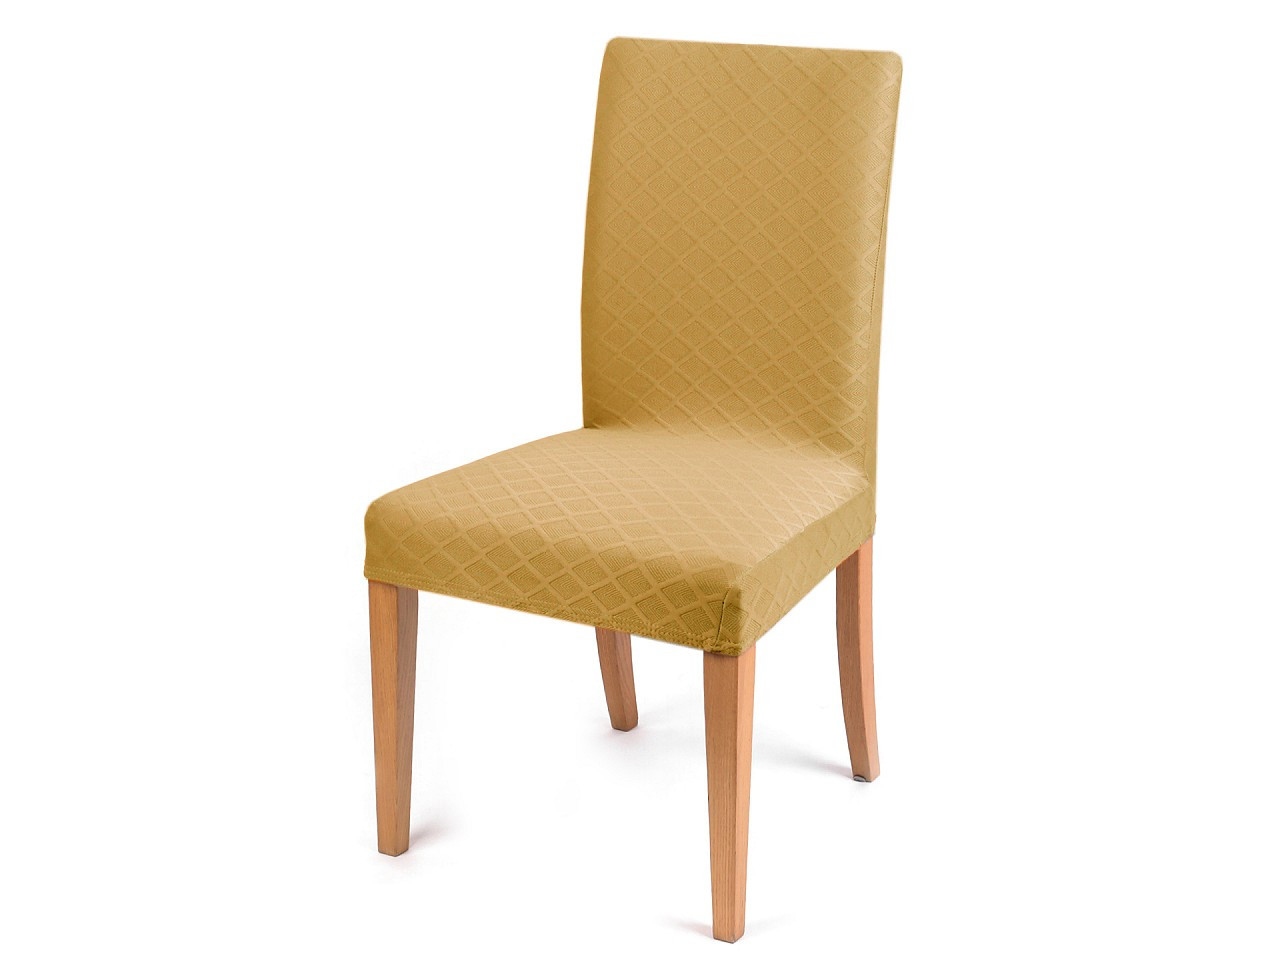 Elastický potah na židli, barva 4 hořčicová světlá